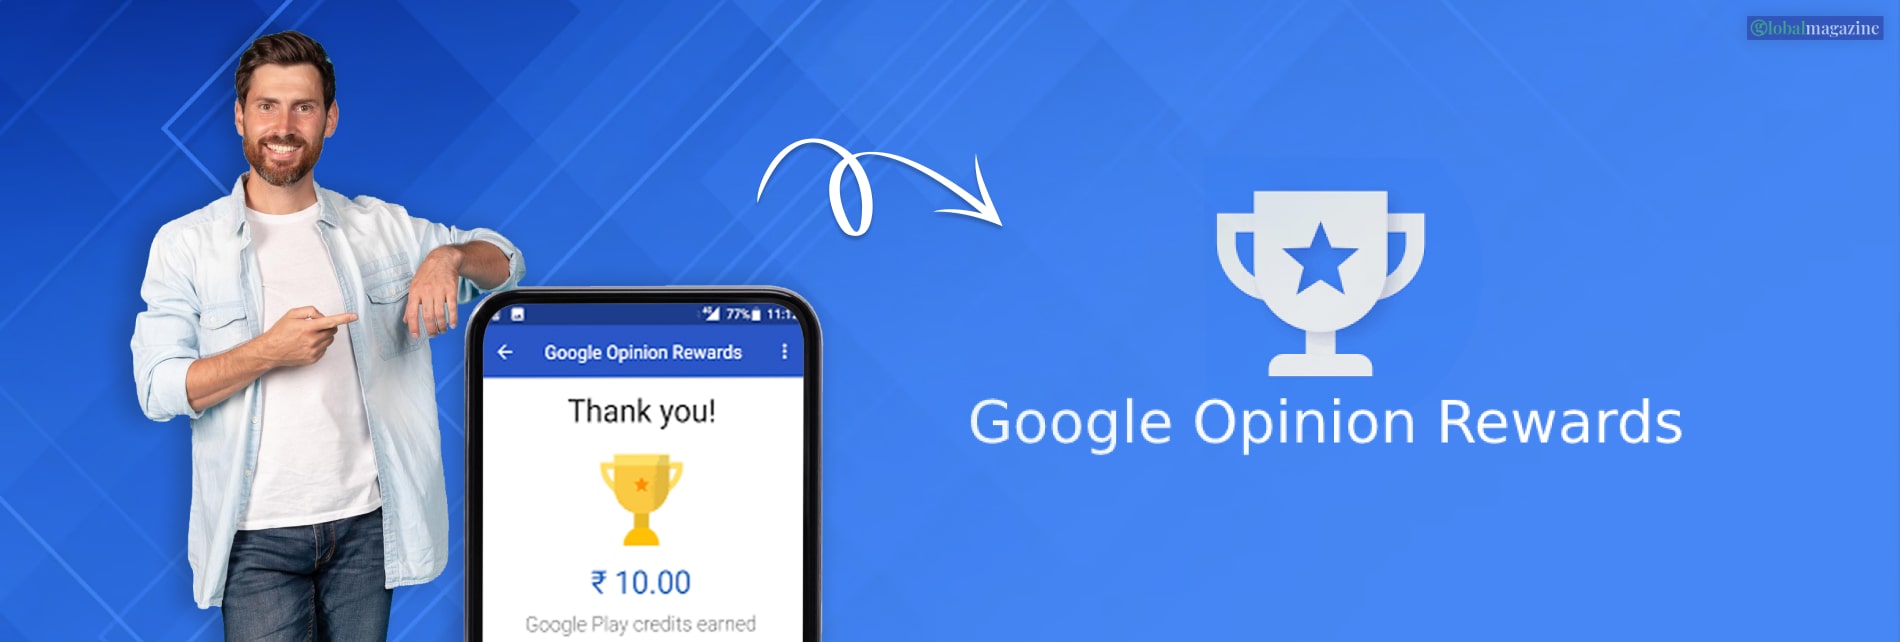 Google Opinion Rewards - Features, Earning Option, Profits